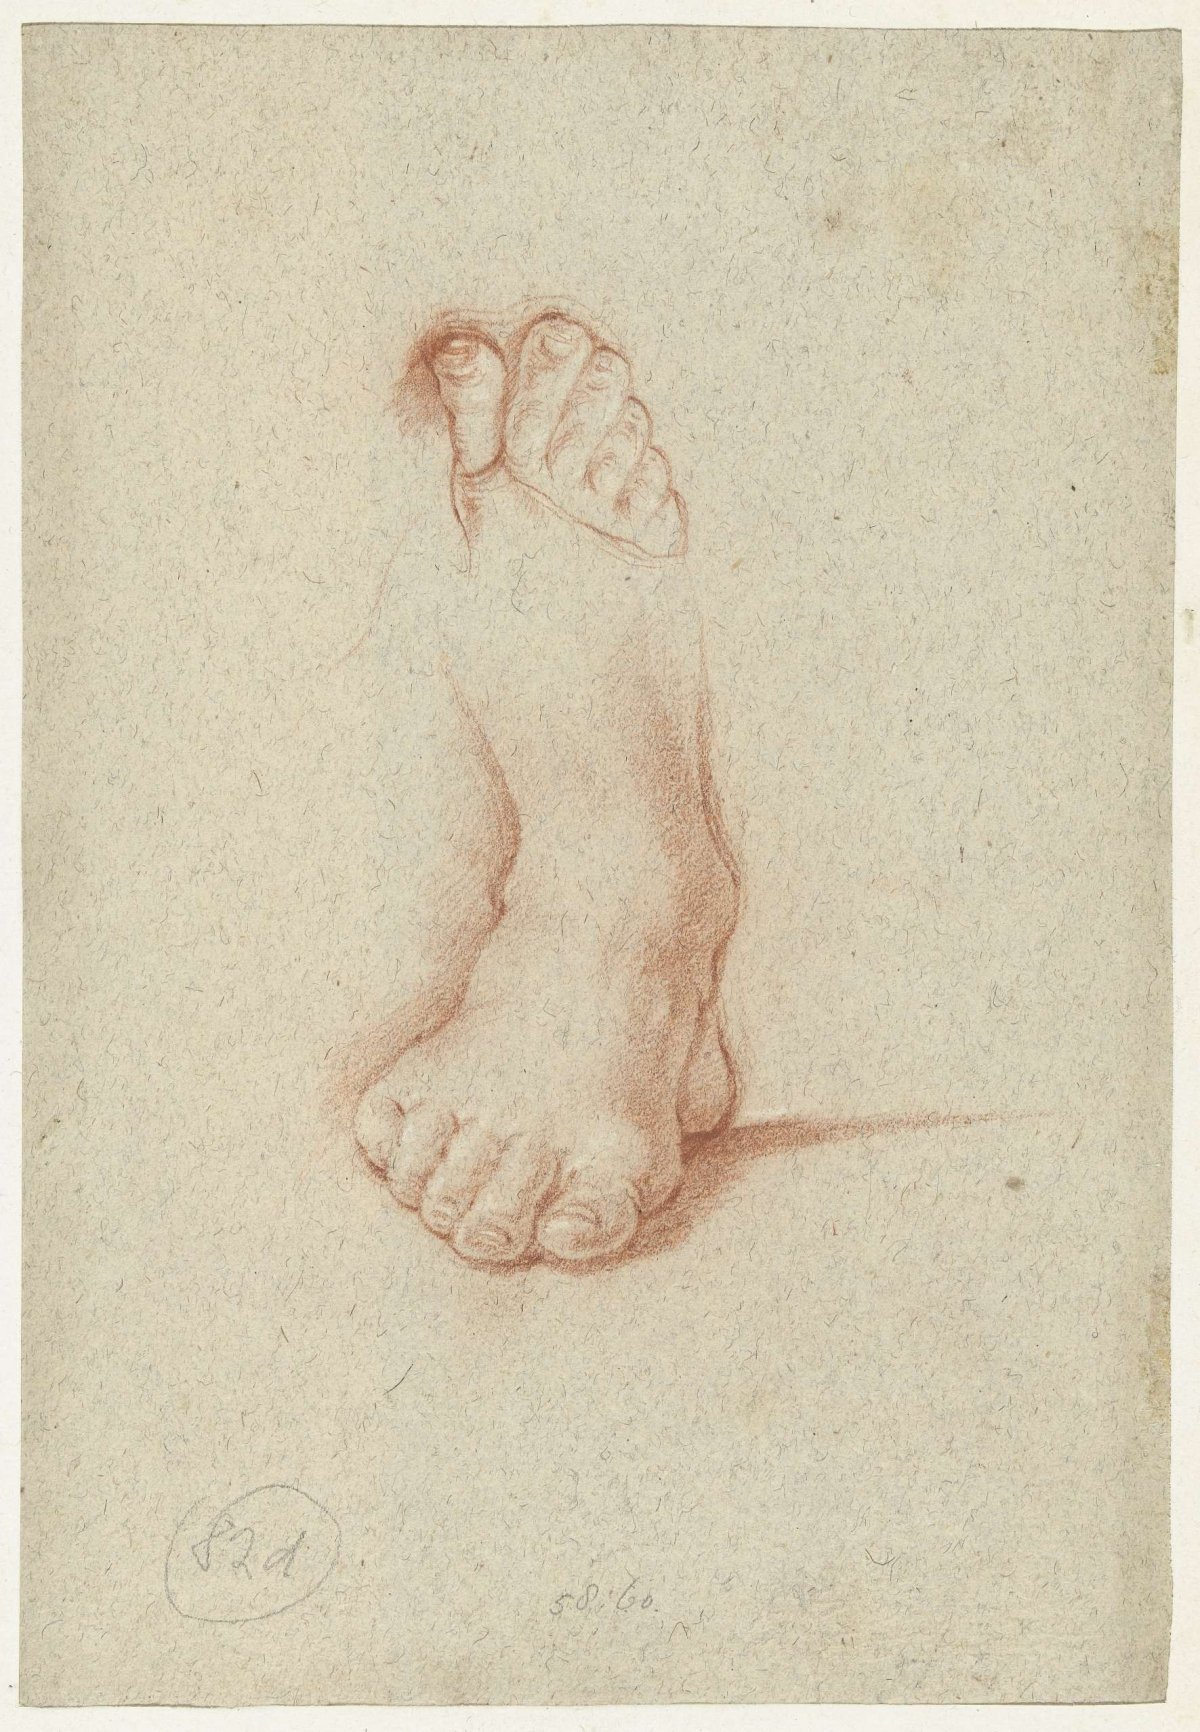 Two studies of a foot, Domenichino, 1591 - 1641